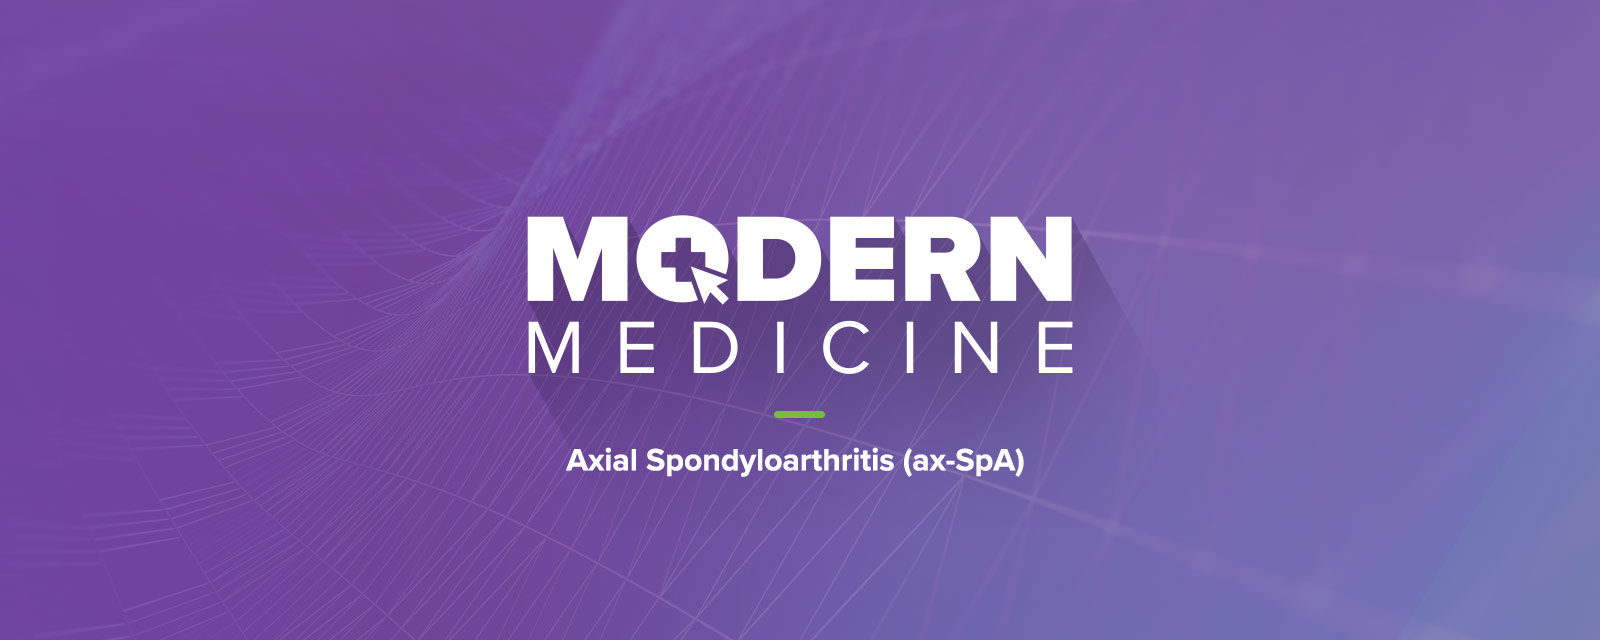 Modern Medicine: ax-SpA